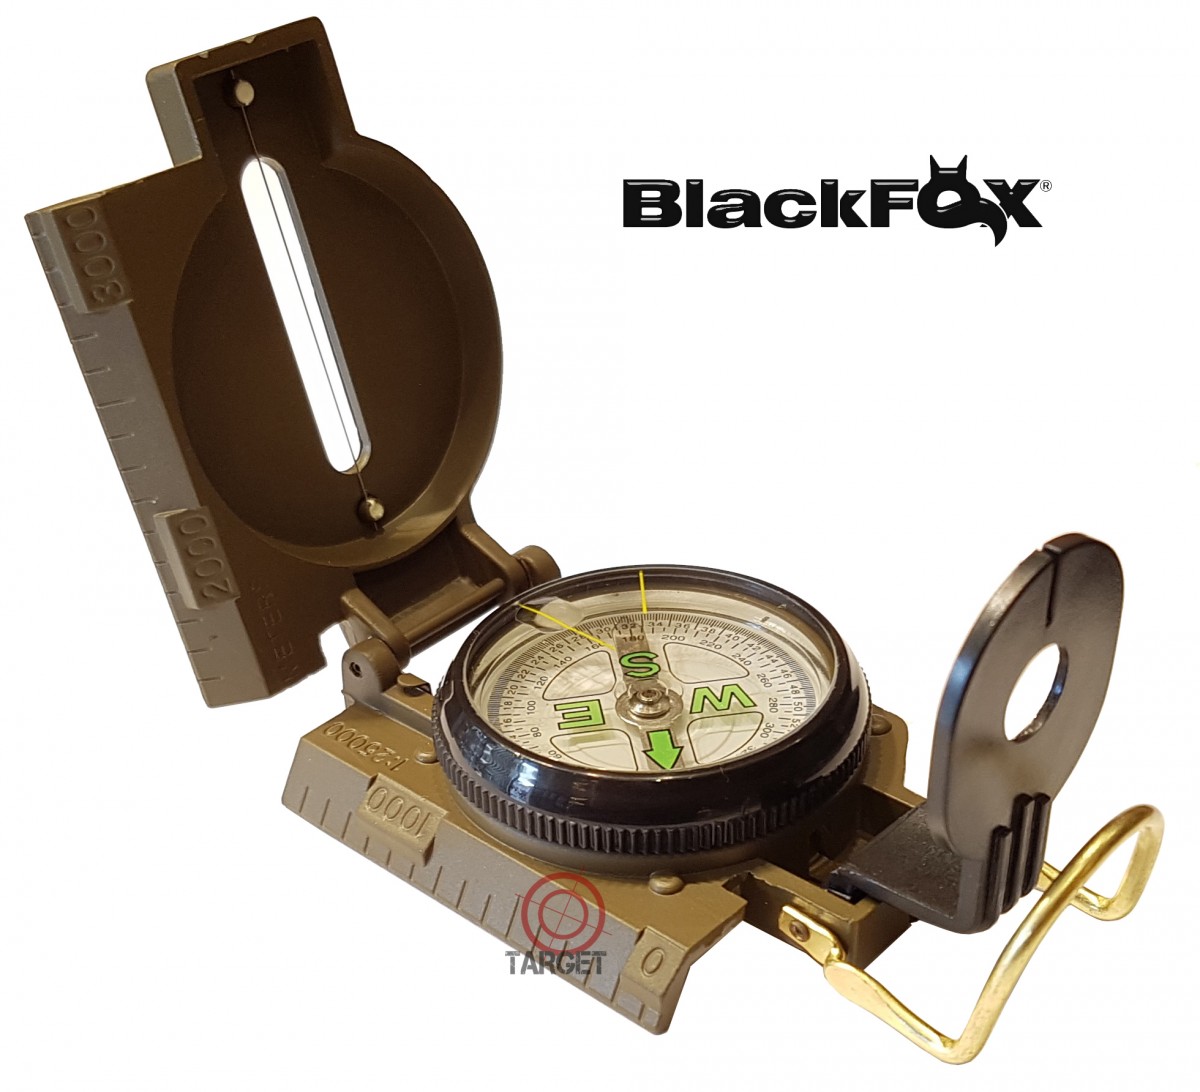 Vendita Blackfox bussola in metallo professionale, vendita online